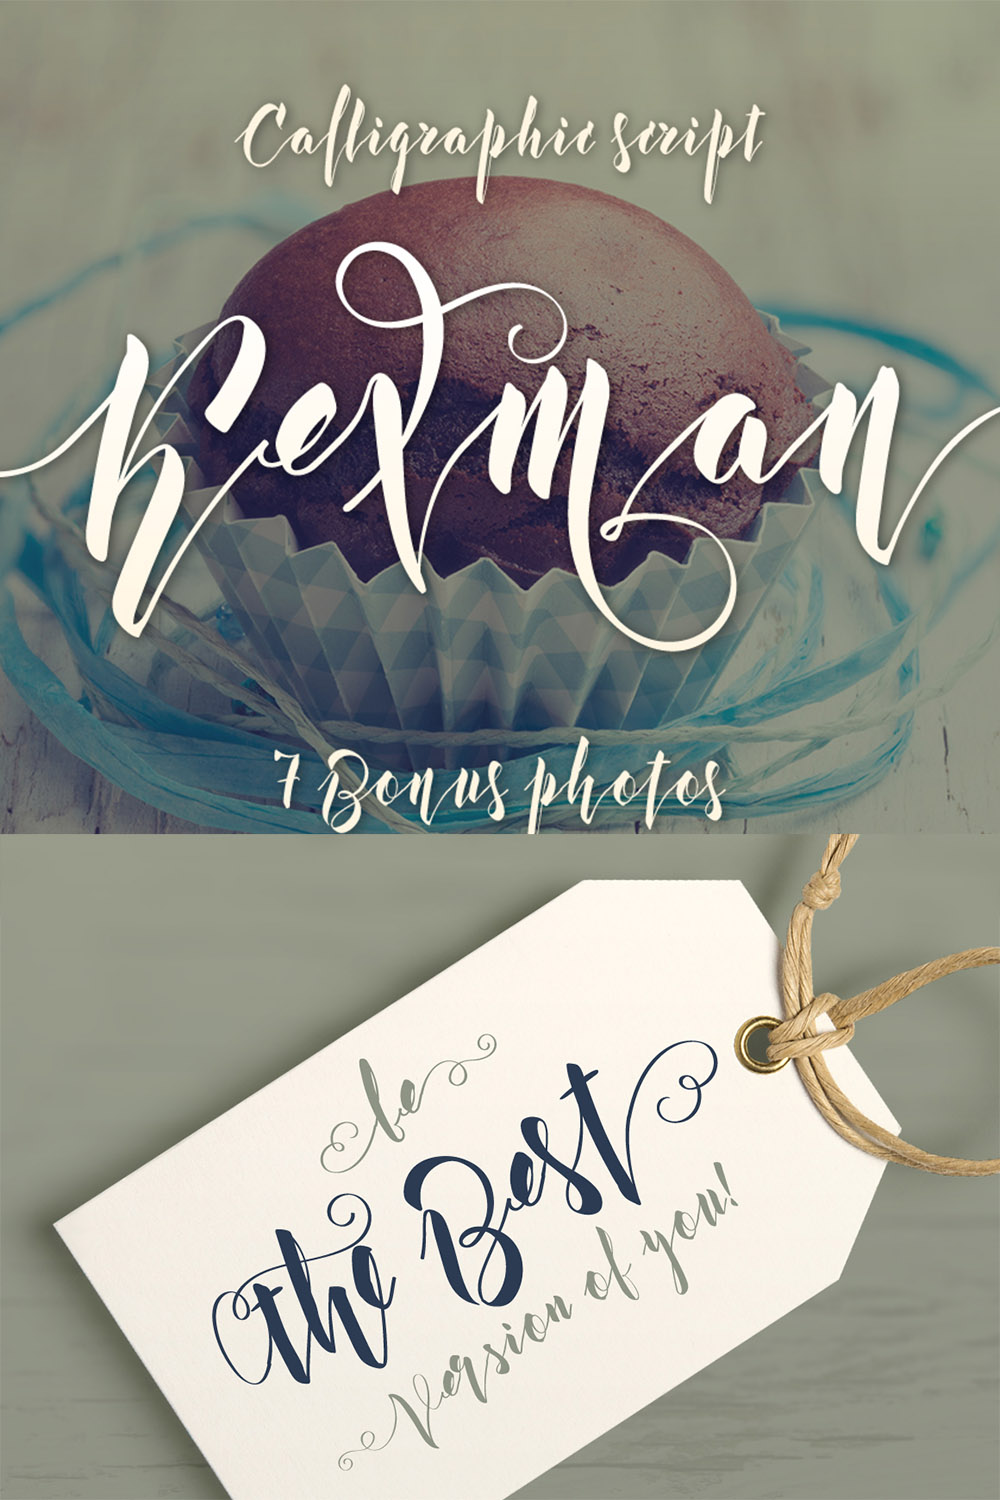 Kexman Font Pinterest Collage image.